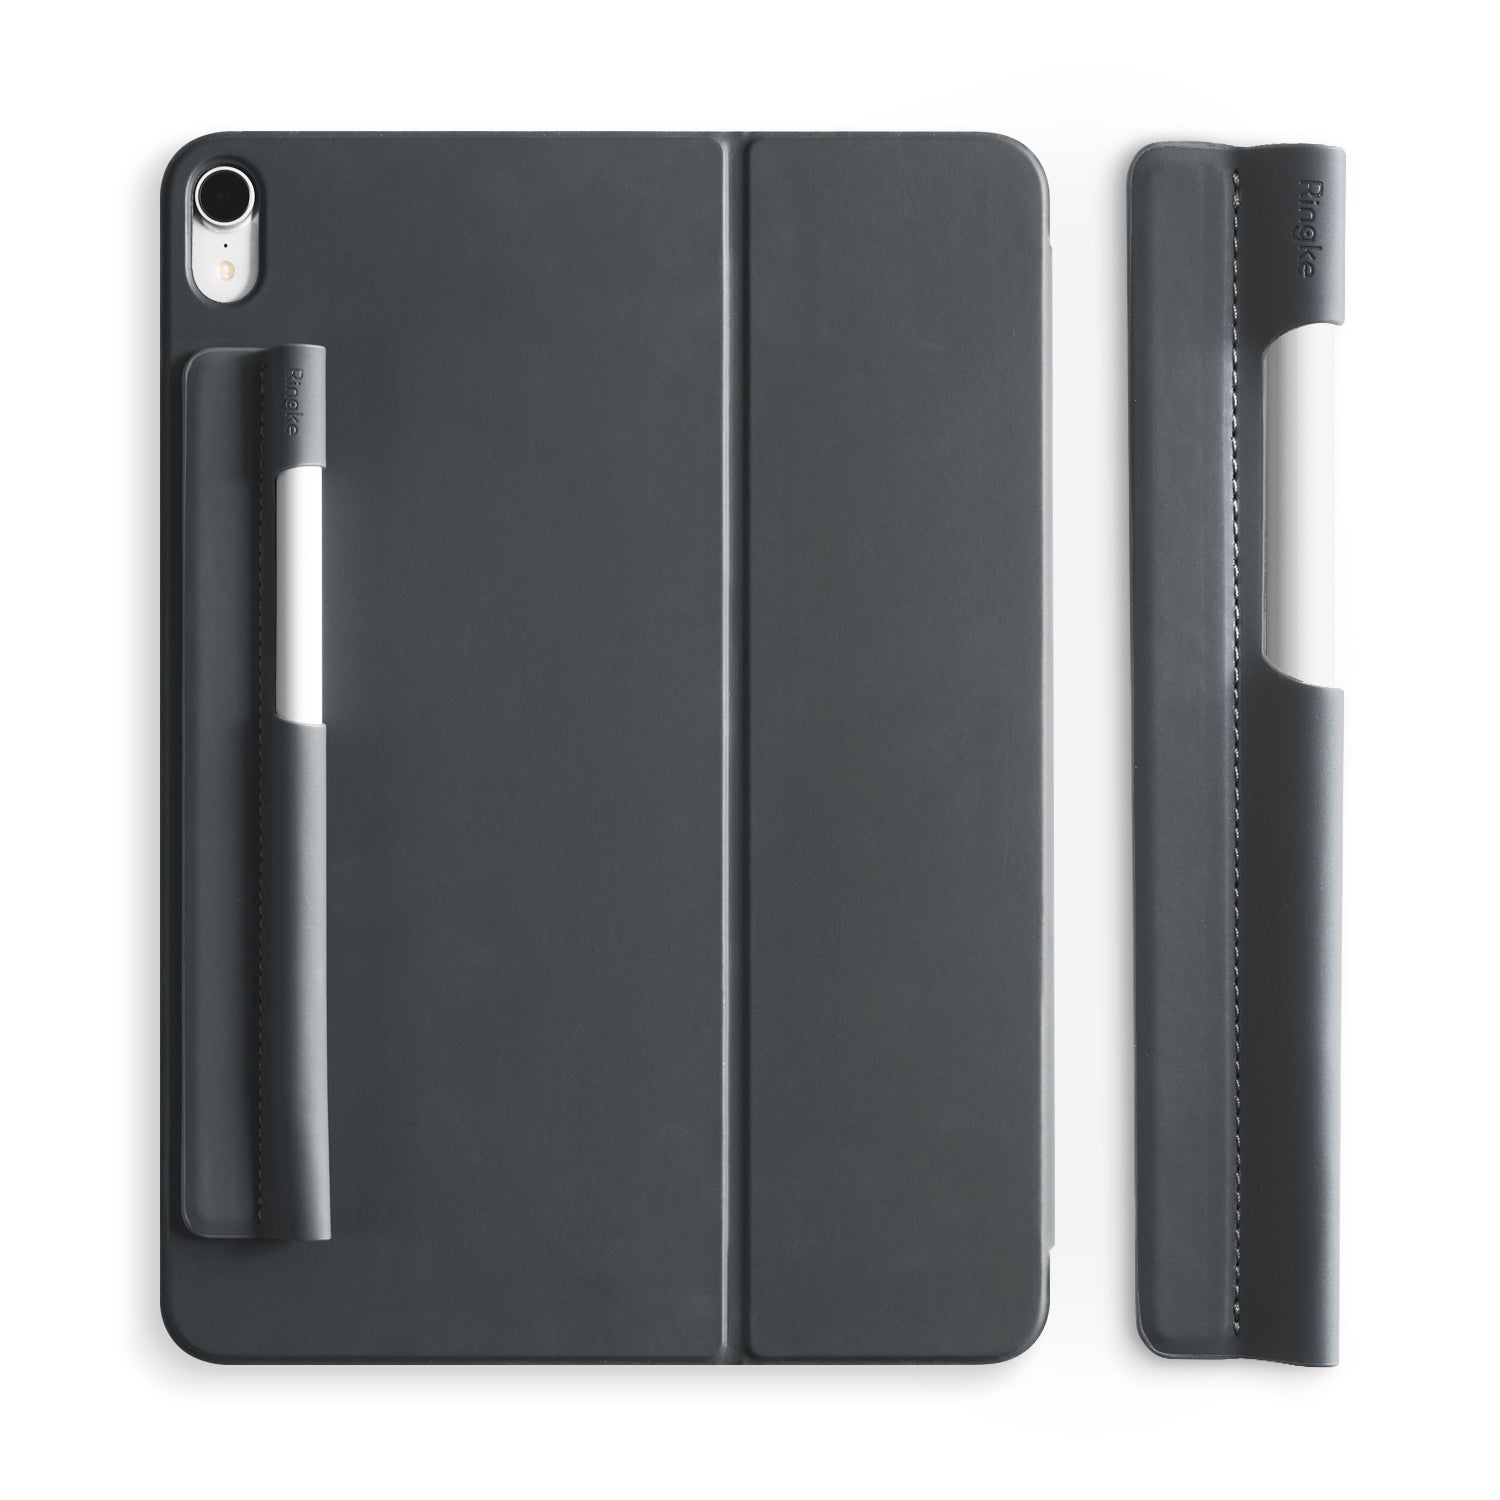 iPad Smart Cover - Charcoal Gray - Apple